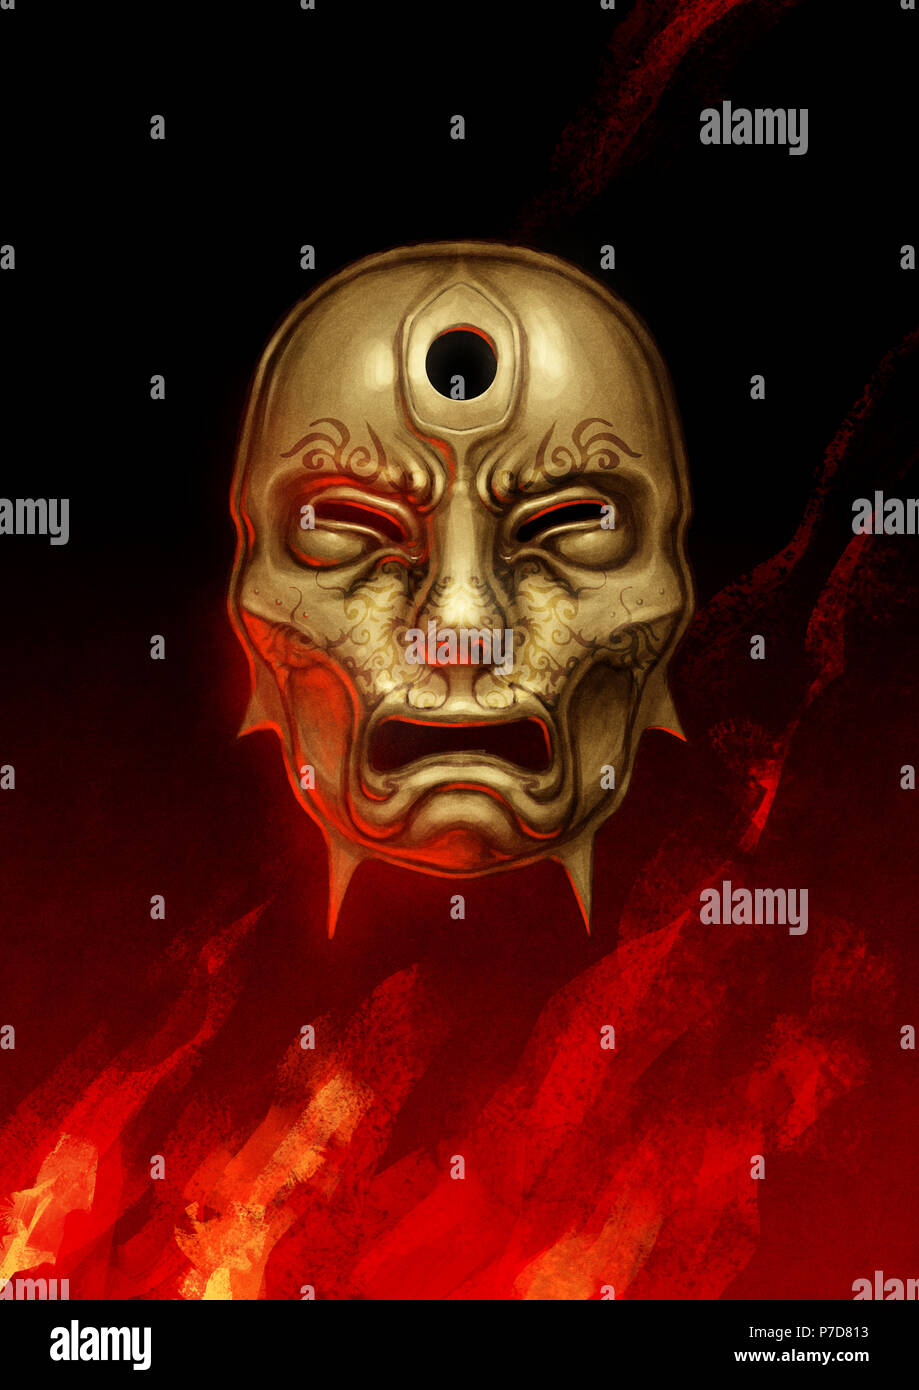 A strange mask floating above flames Stock Photo - Alamy